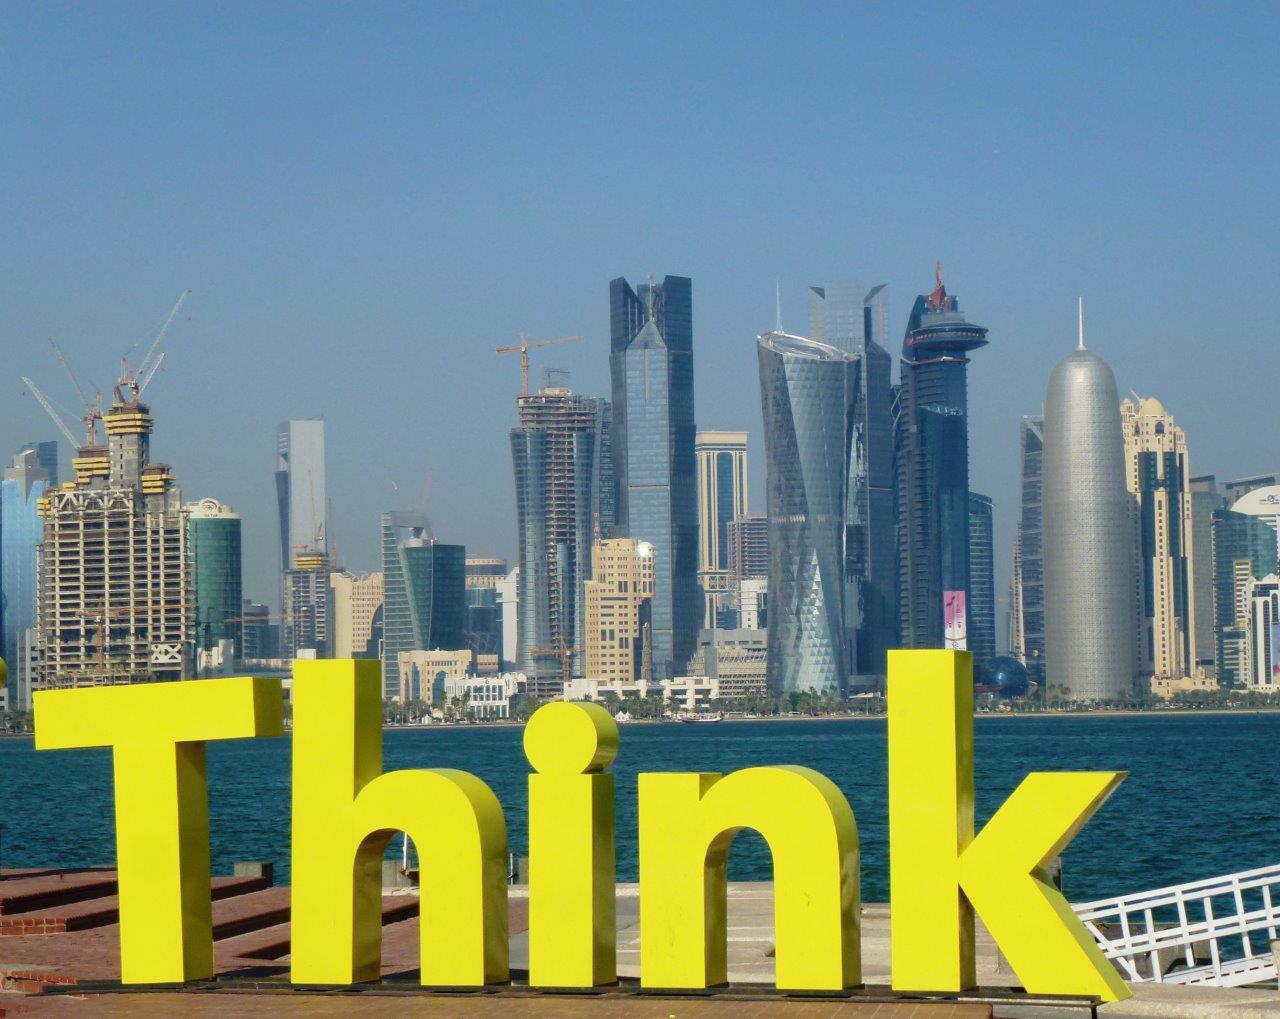 001 Qatar think and realise signs 2012-13 camera 1 P1050915 (689) - Copy - Copy